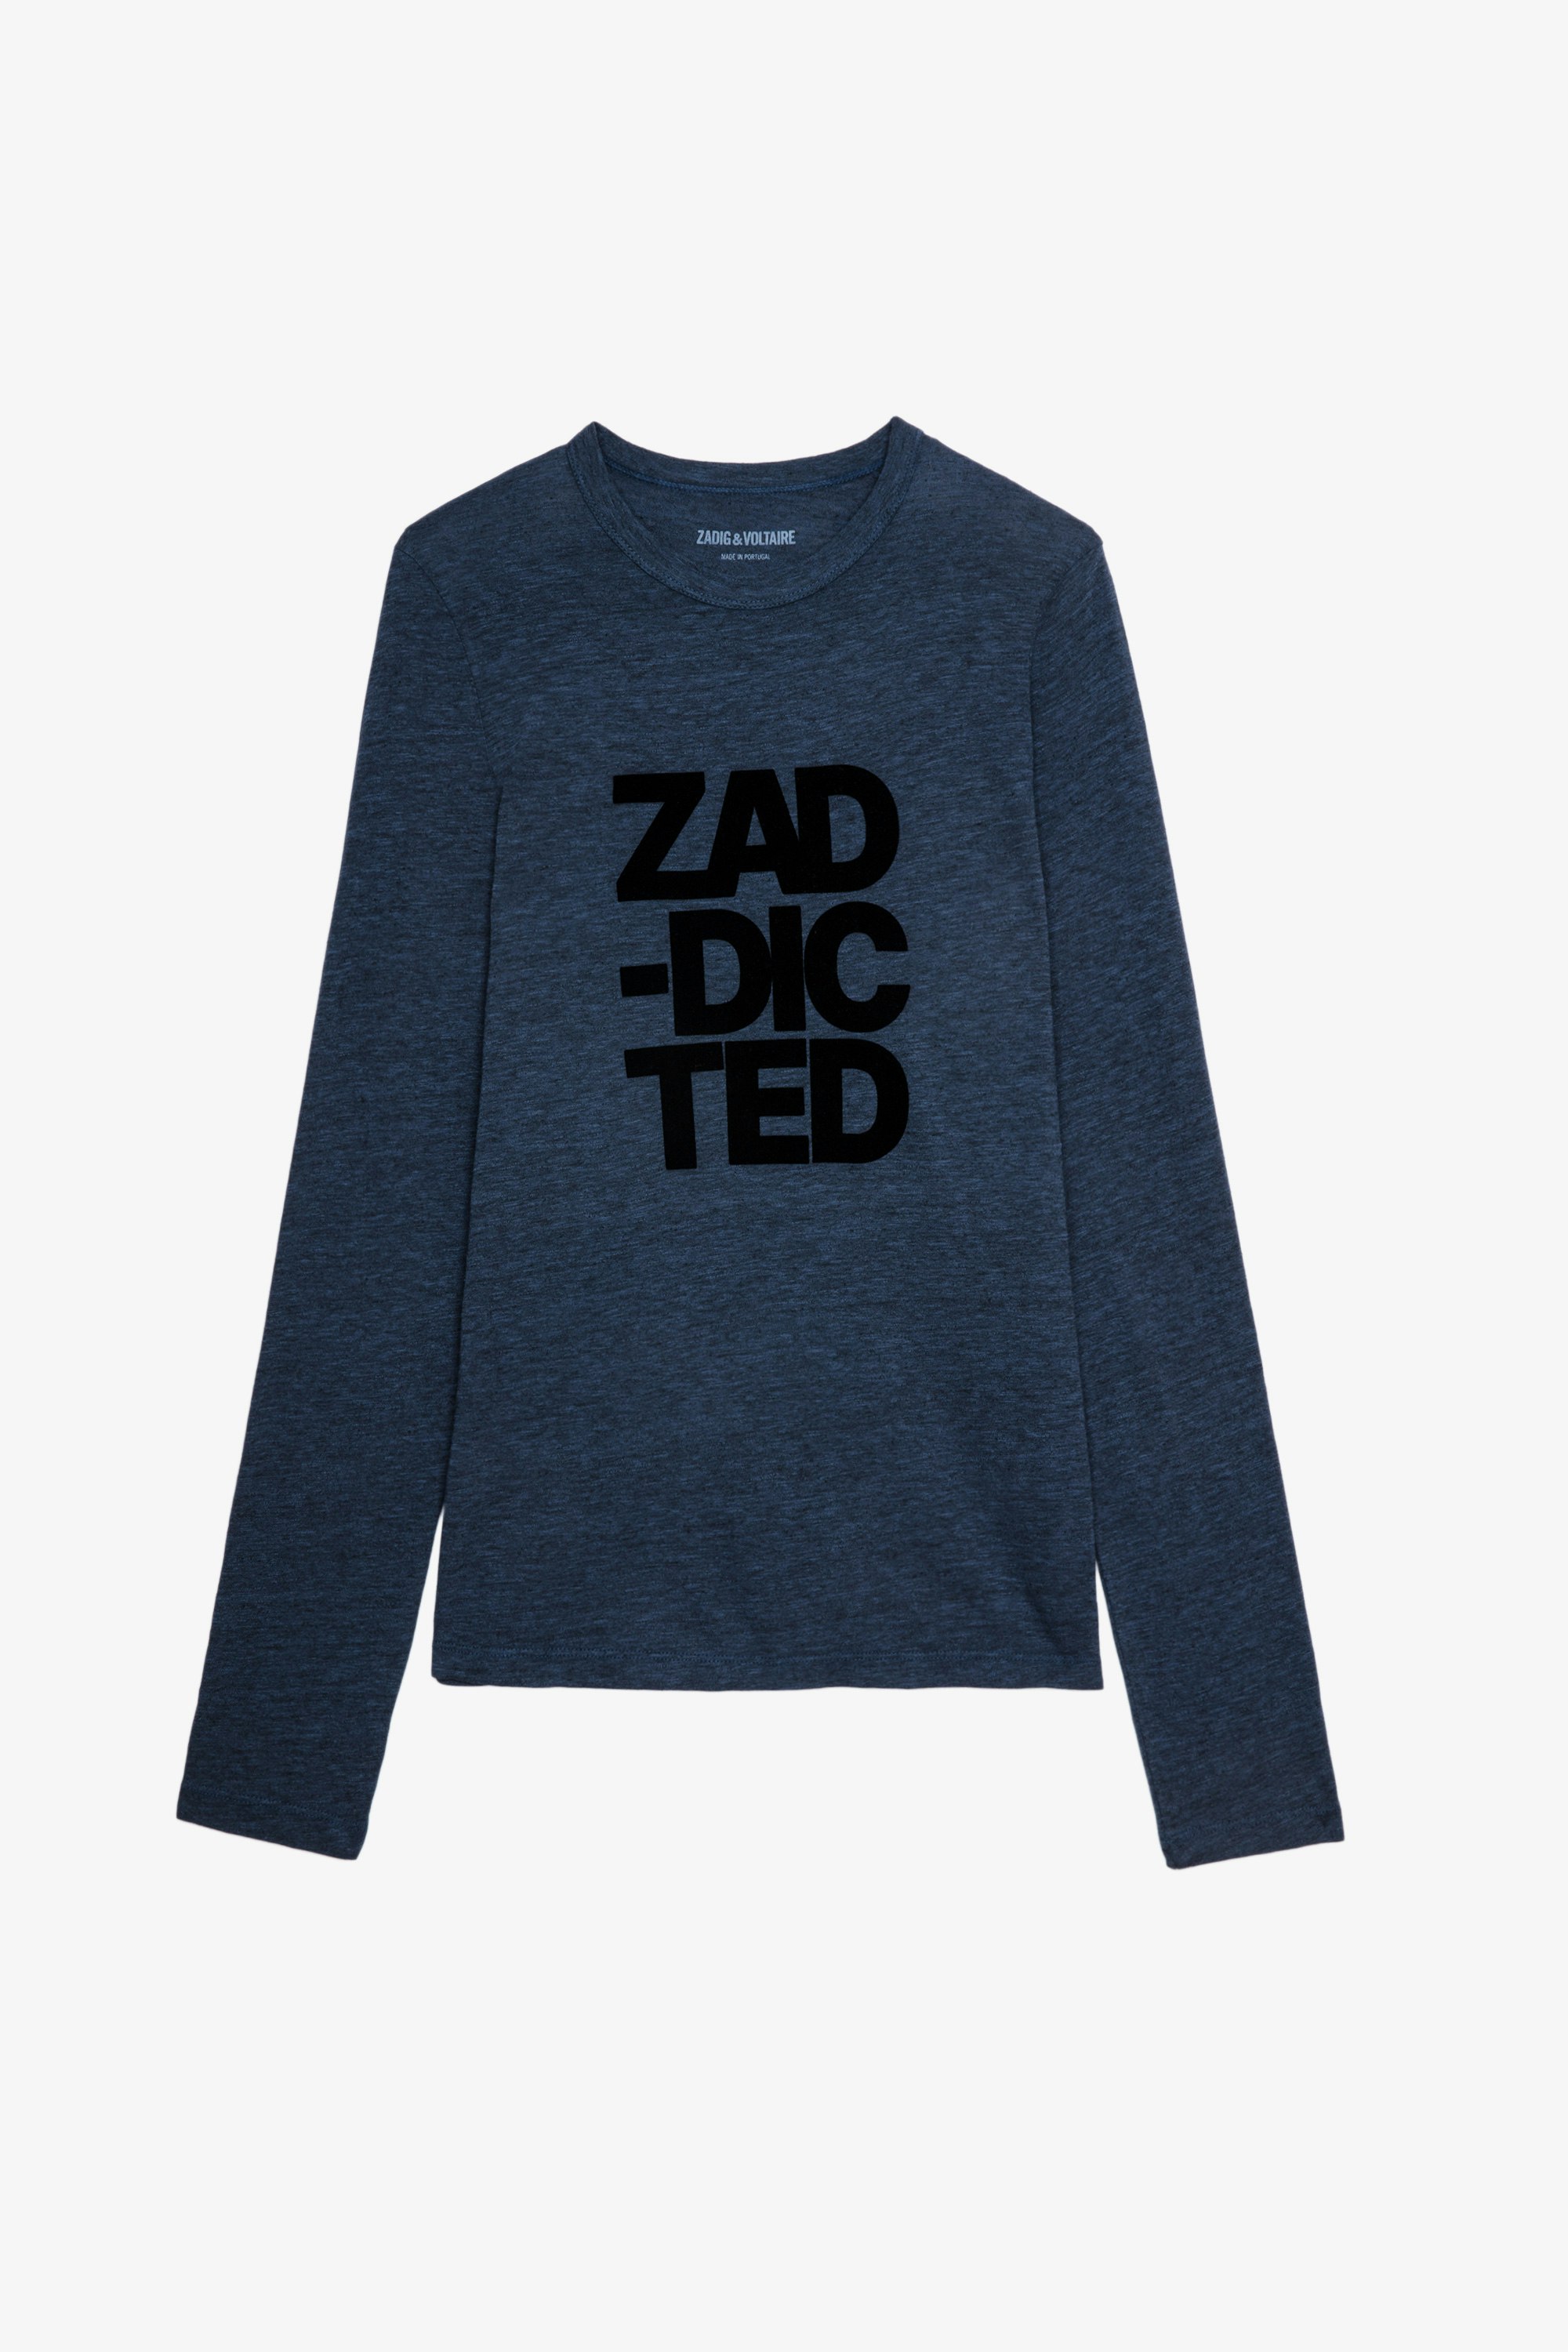 Camiseta Willy Zaddicted Camiseta azul con aplicación Zaddicted para mujer